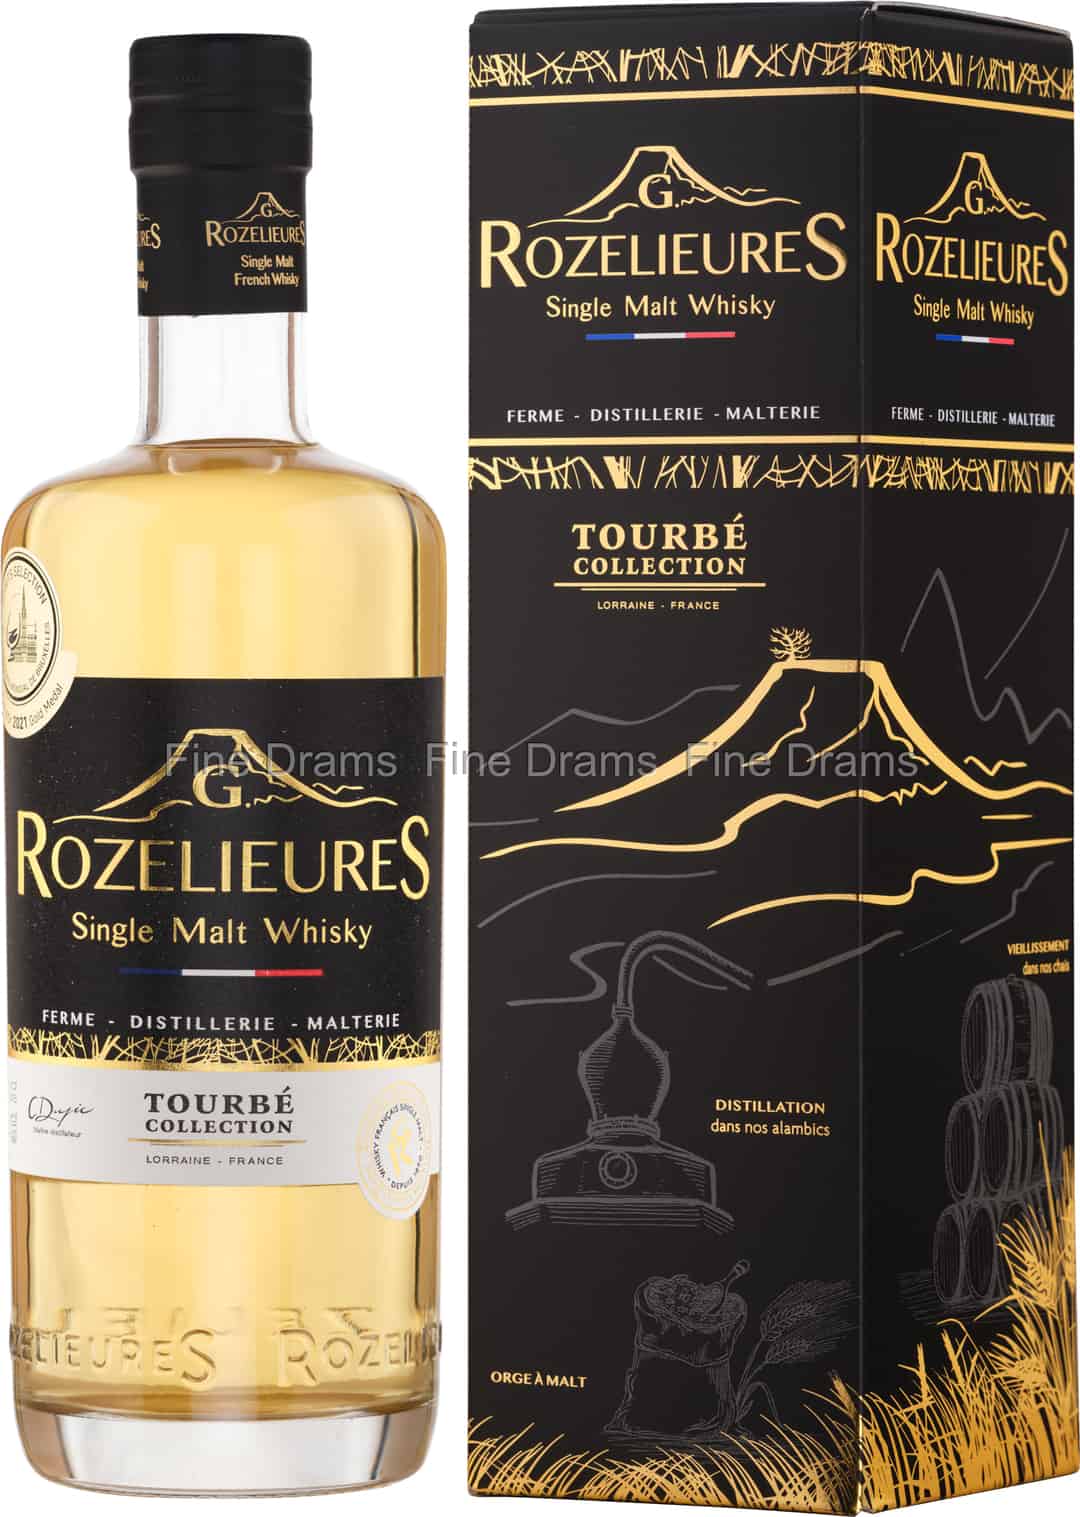 Whisky - G.ROZELIEURES - Tourbé Collection - Single Malt